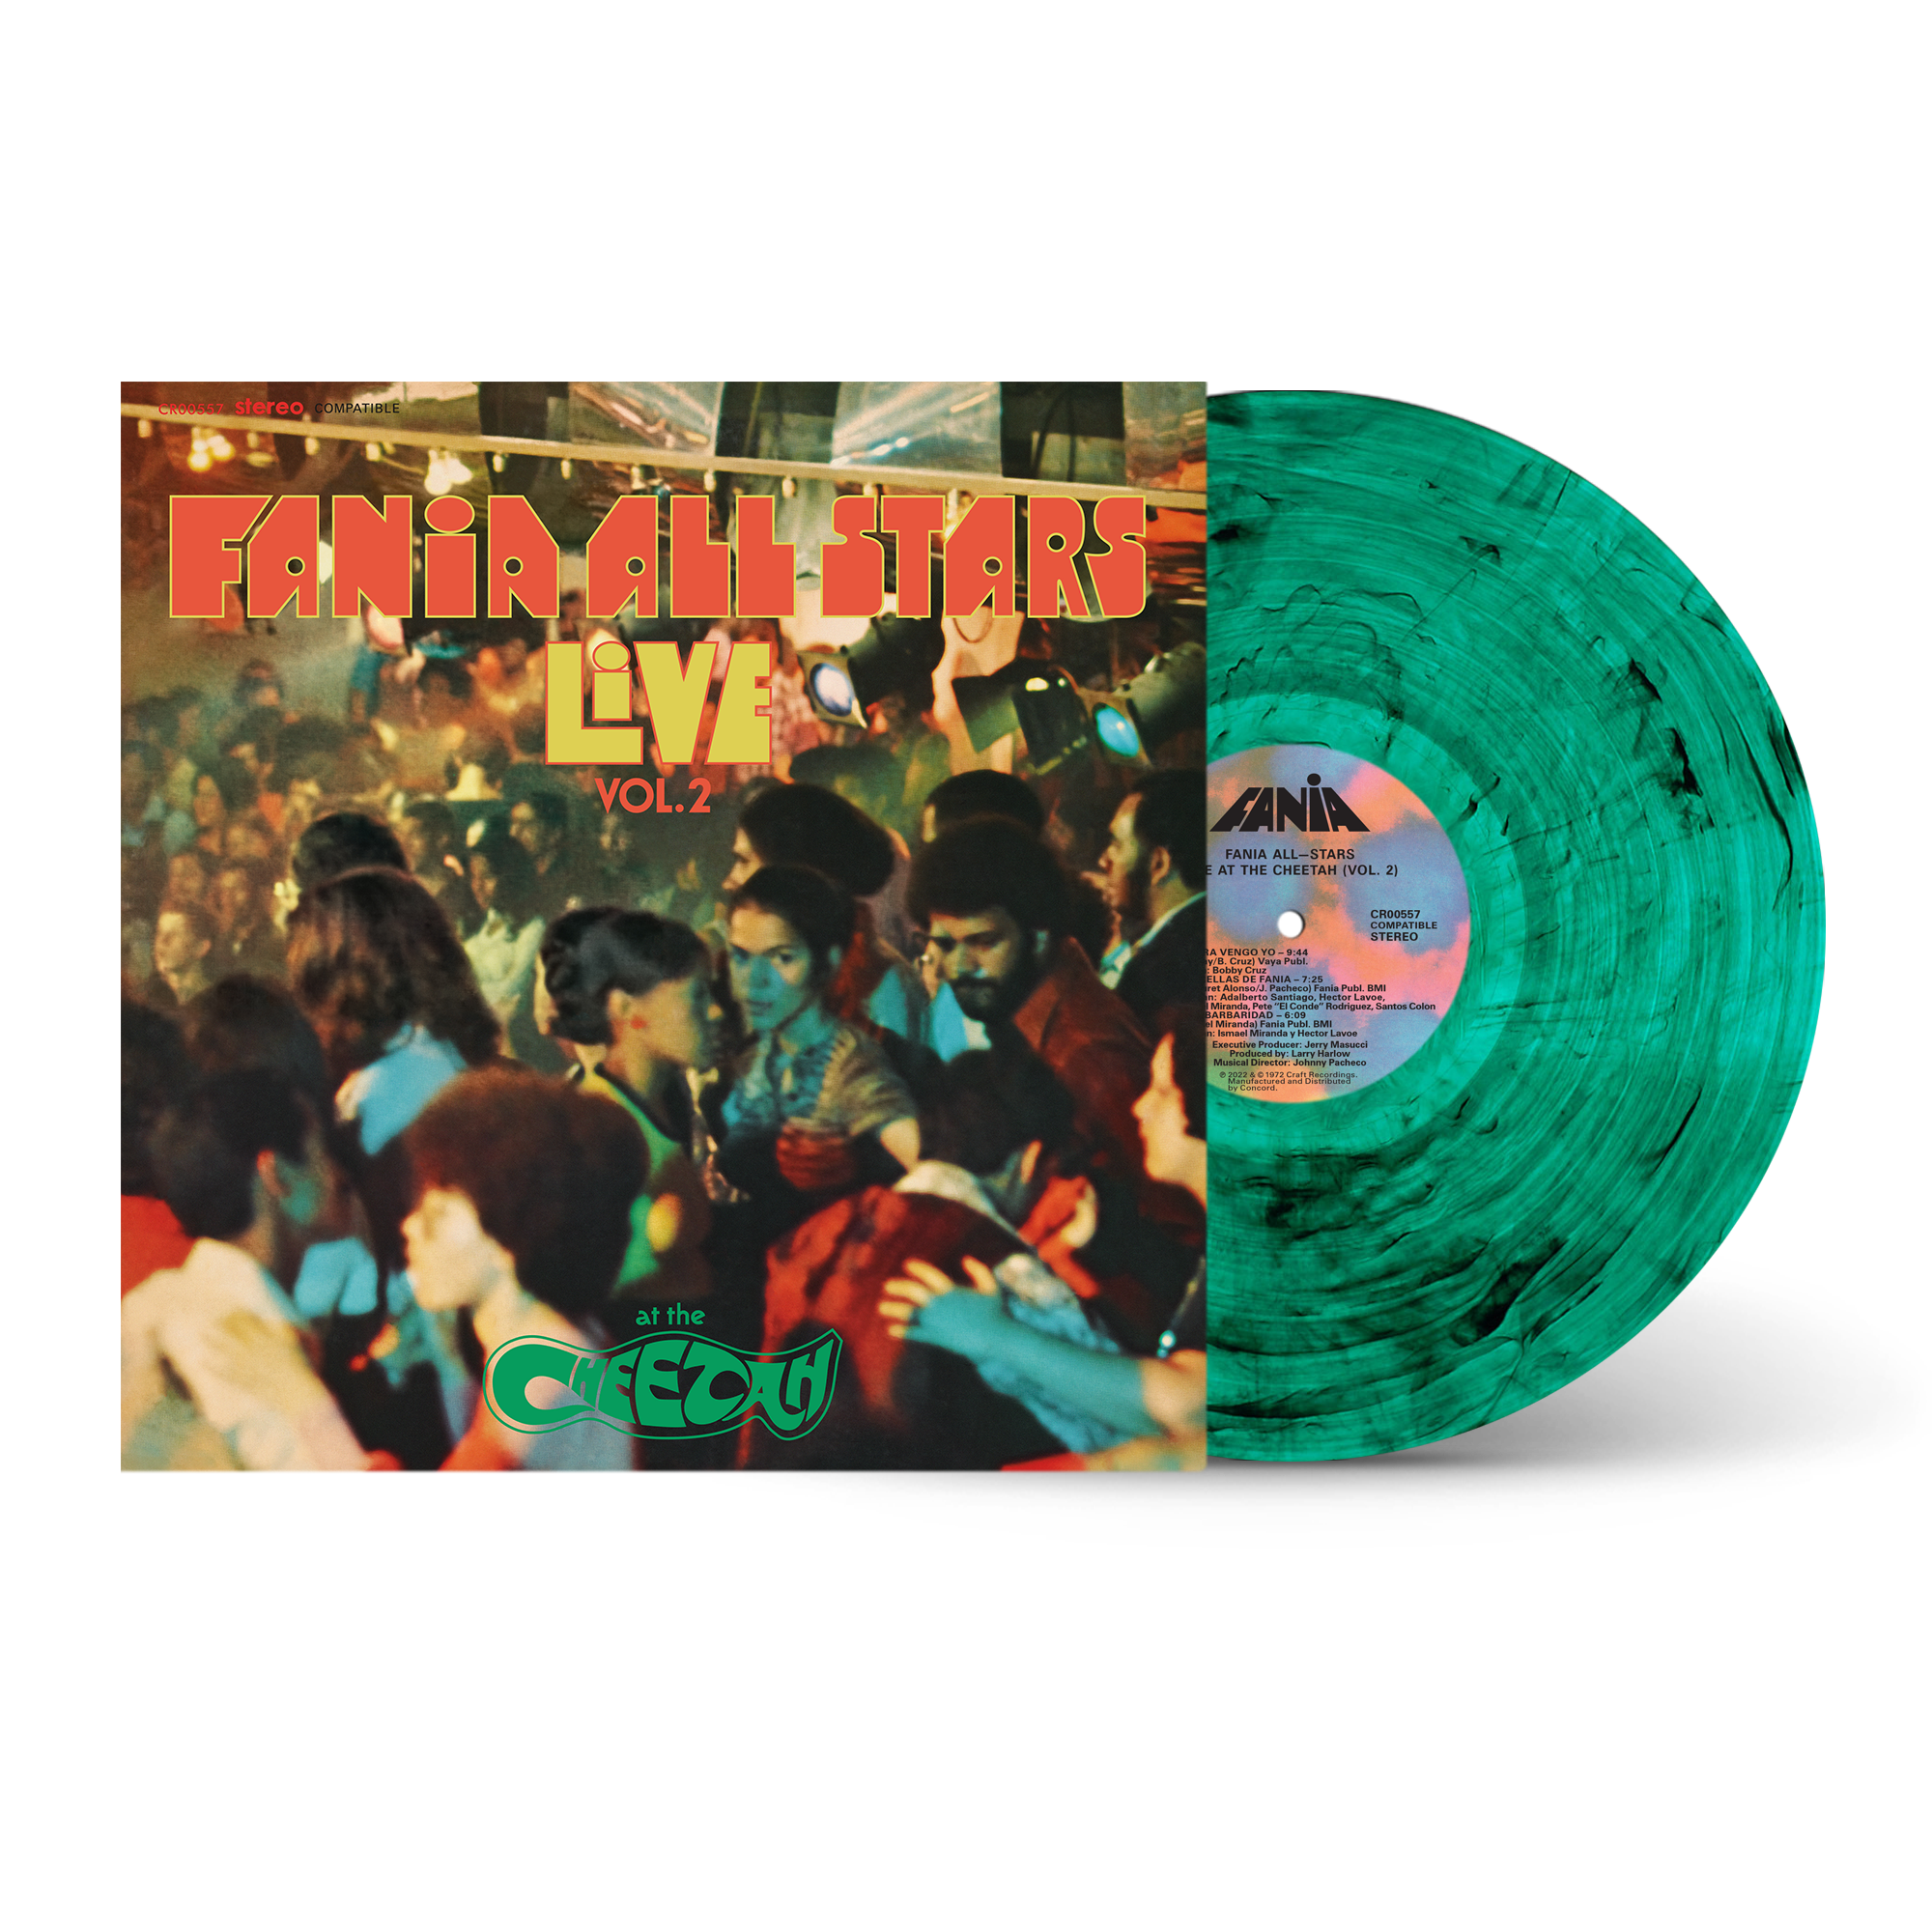 Live At The Cheetah, Vol. 2 (180g Green Smoke LP - Fania Exclusive)